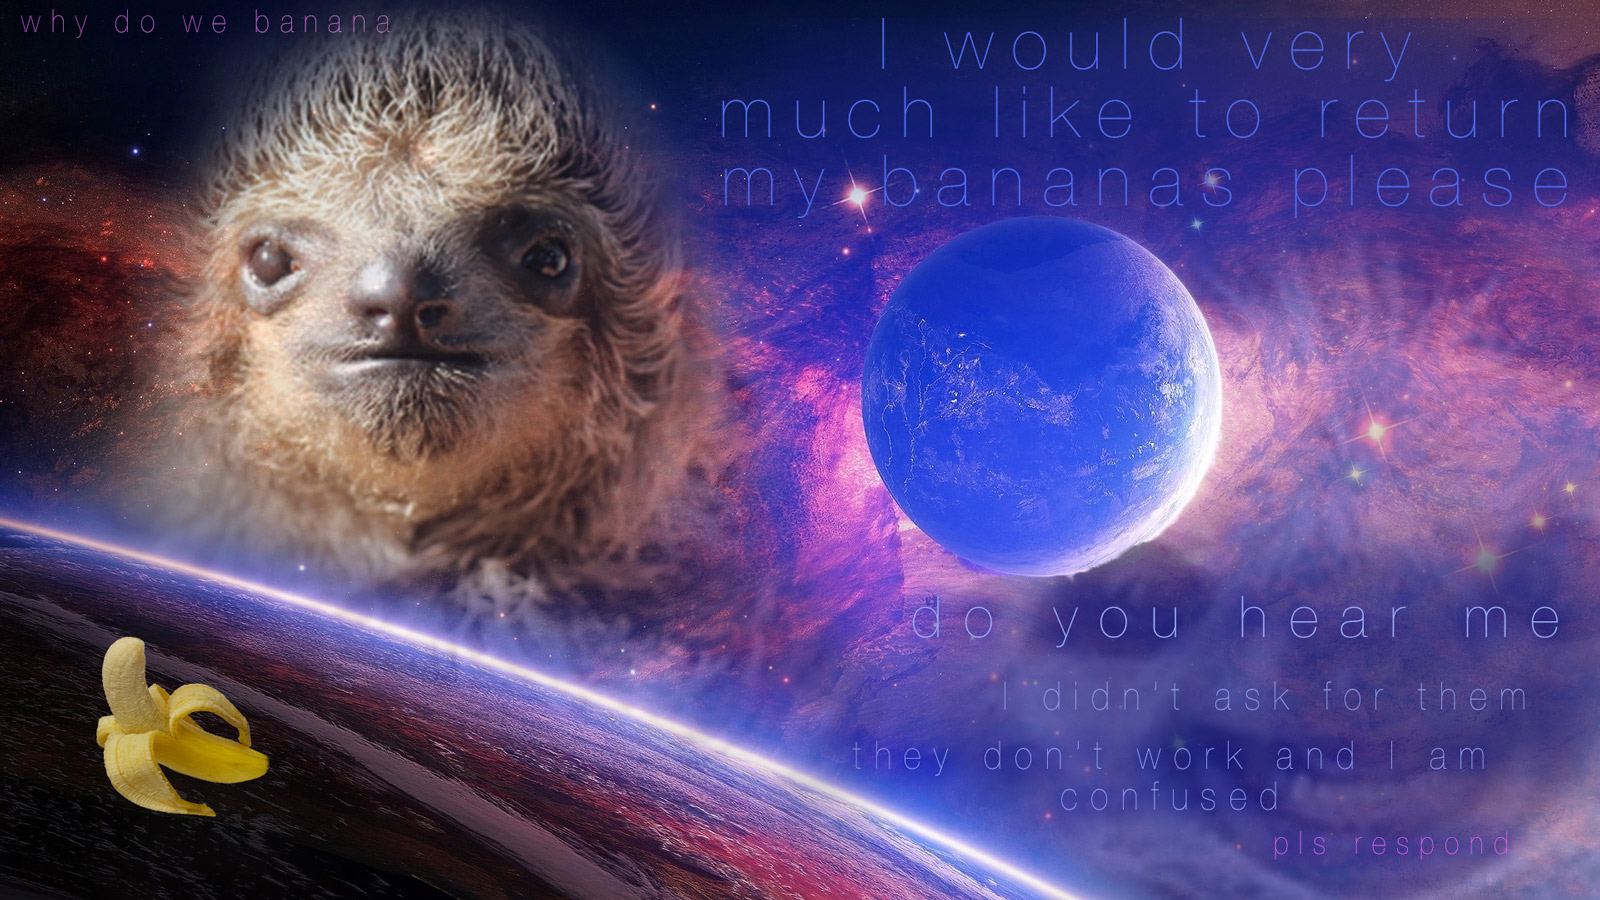 Space Sloth have Bananas